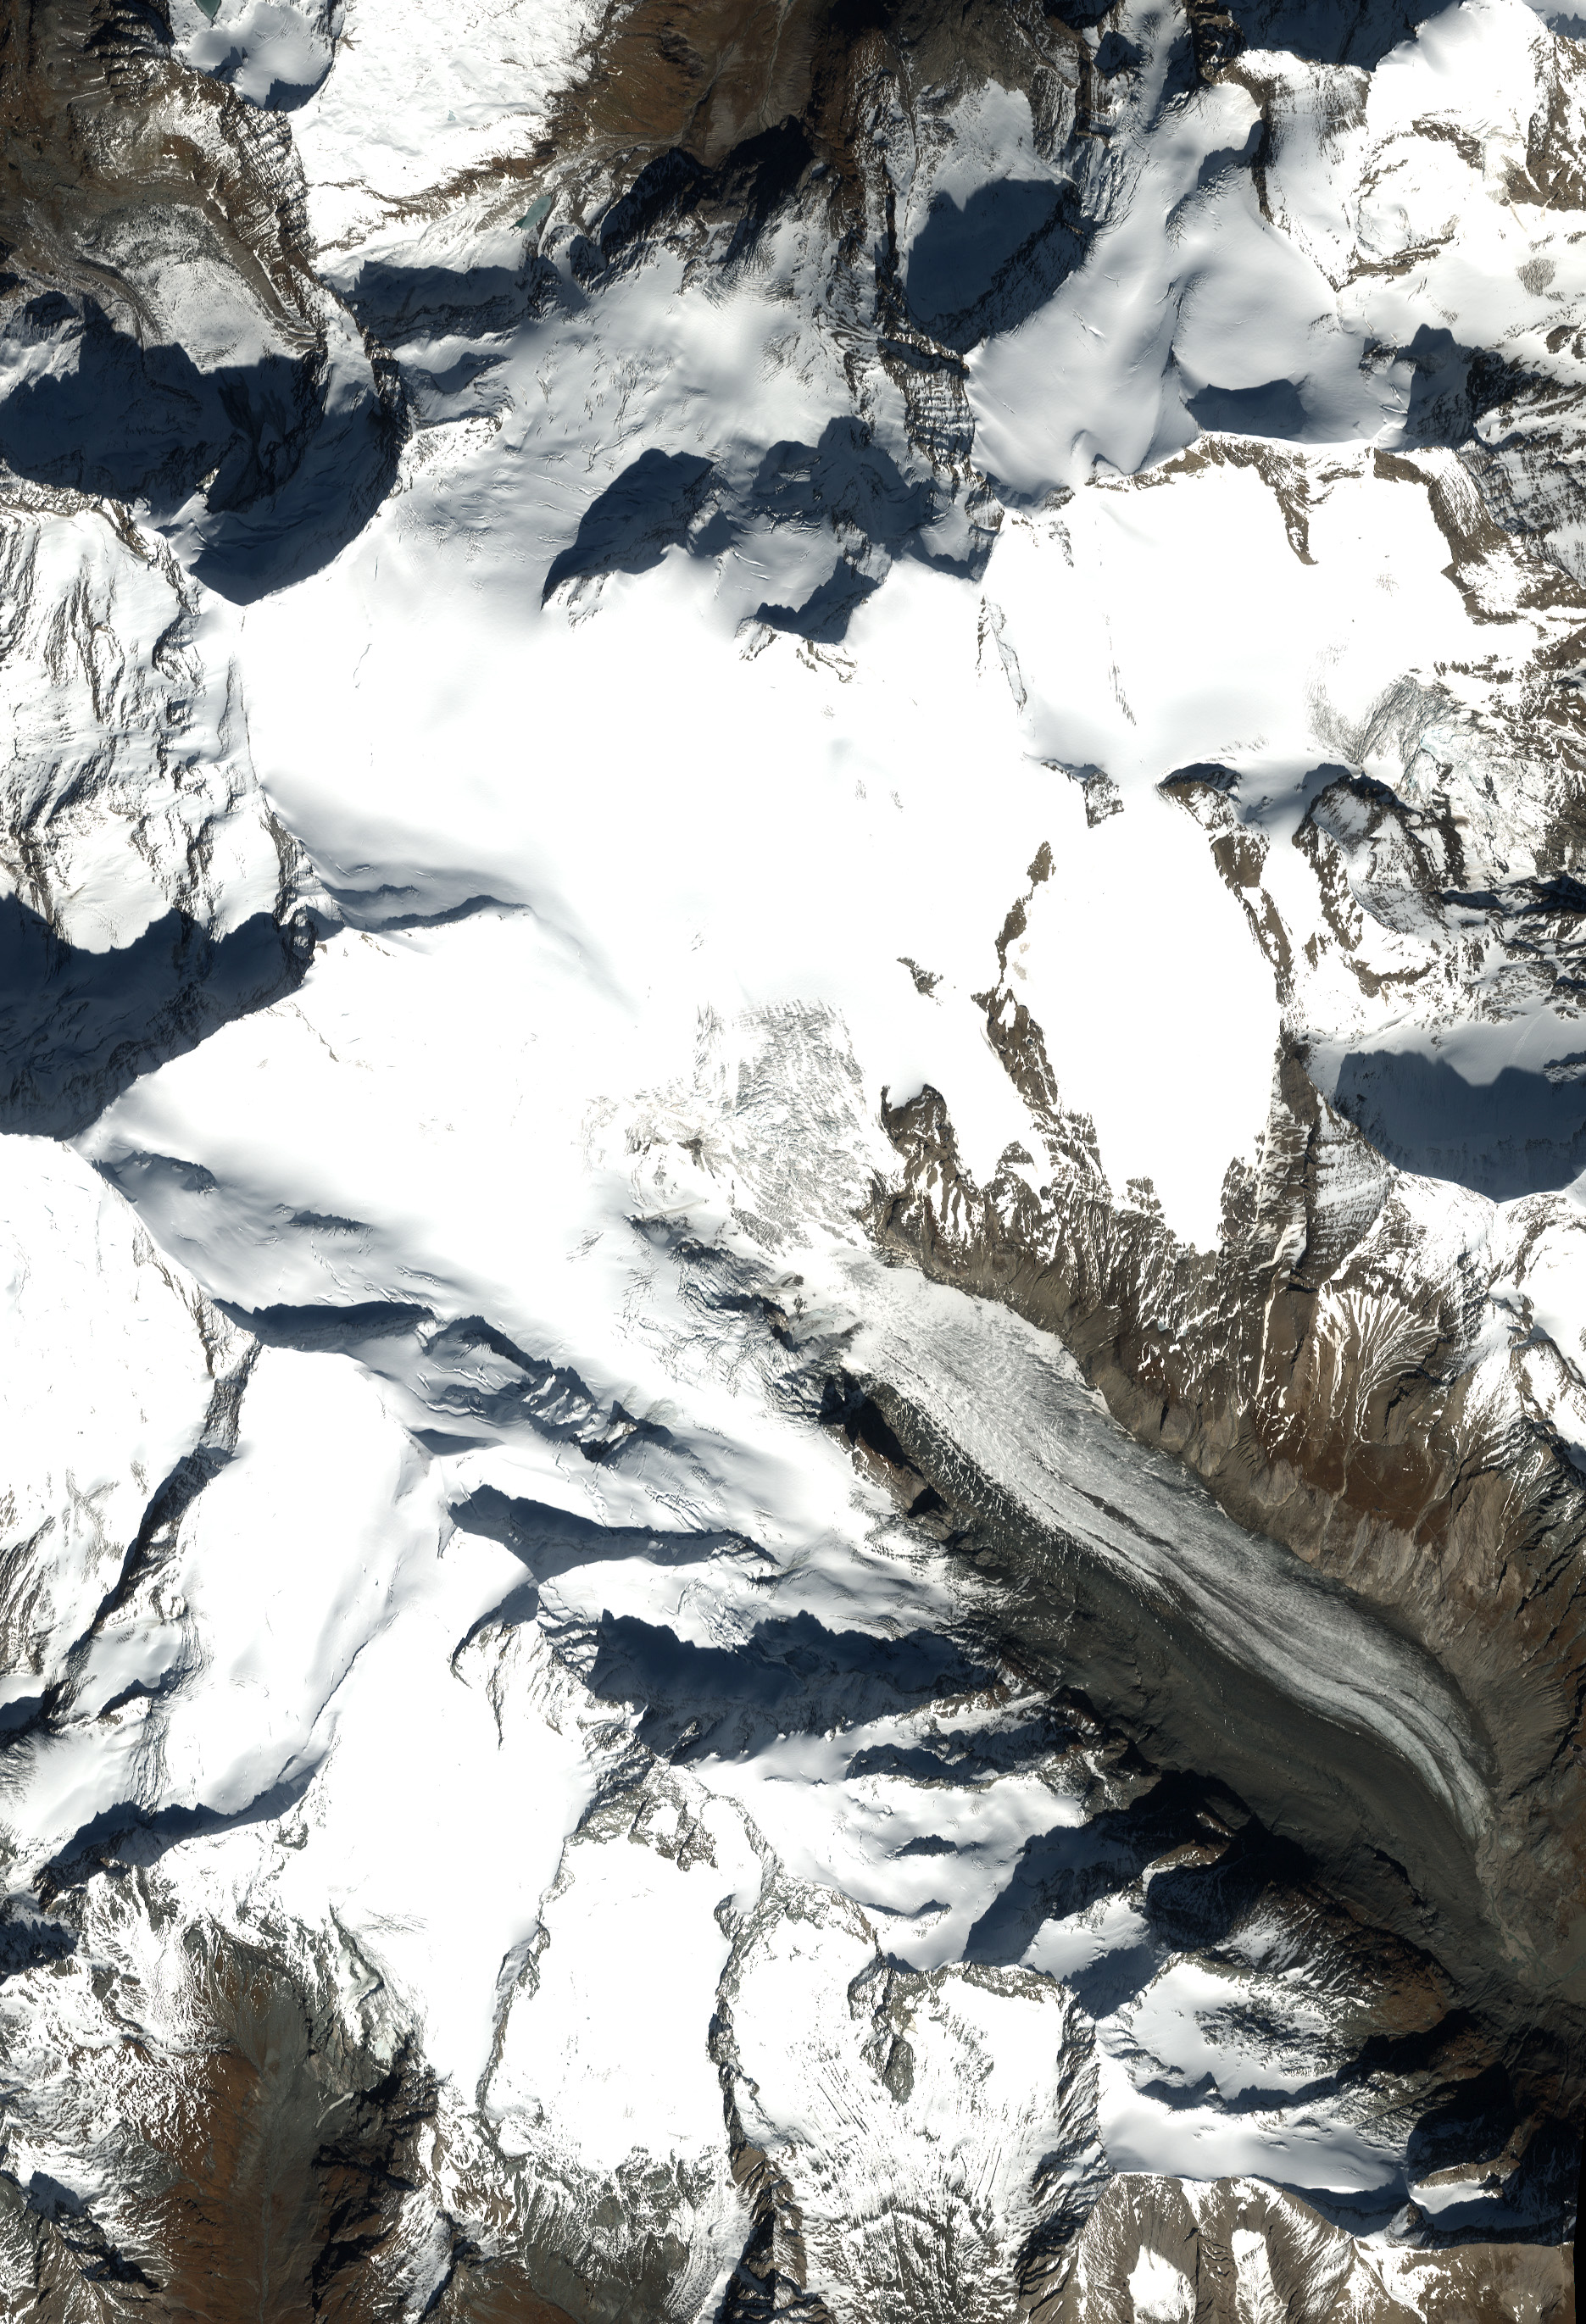 Pasterze Glacier, Austria - related image preview